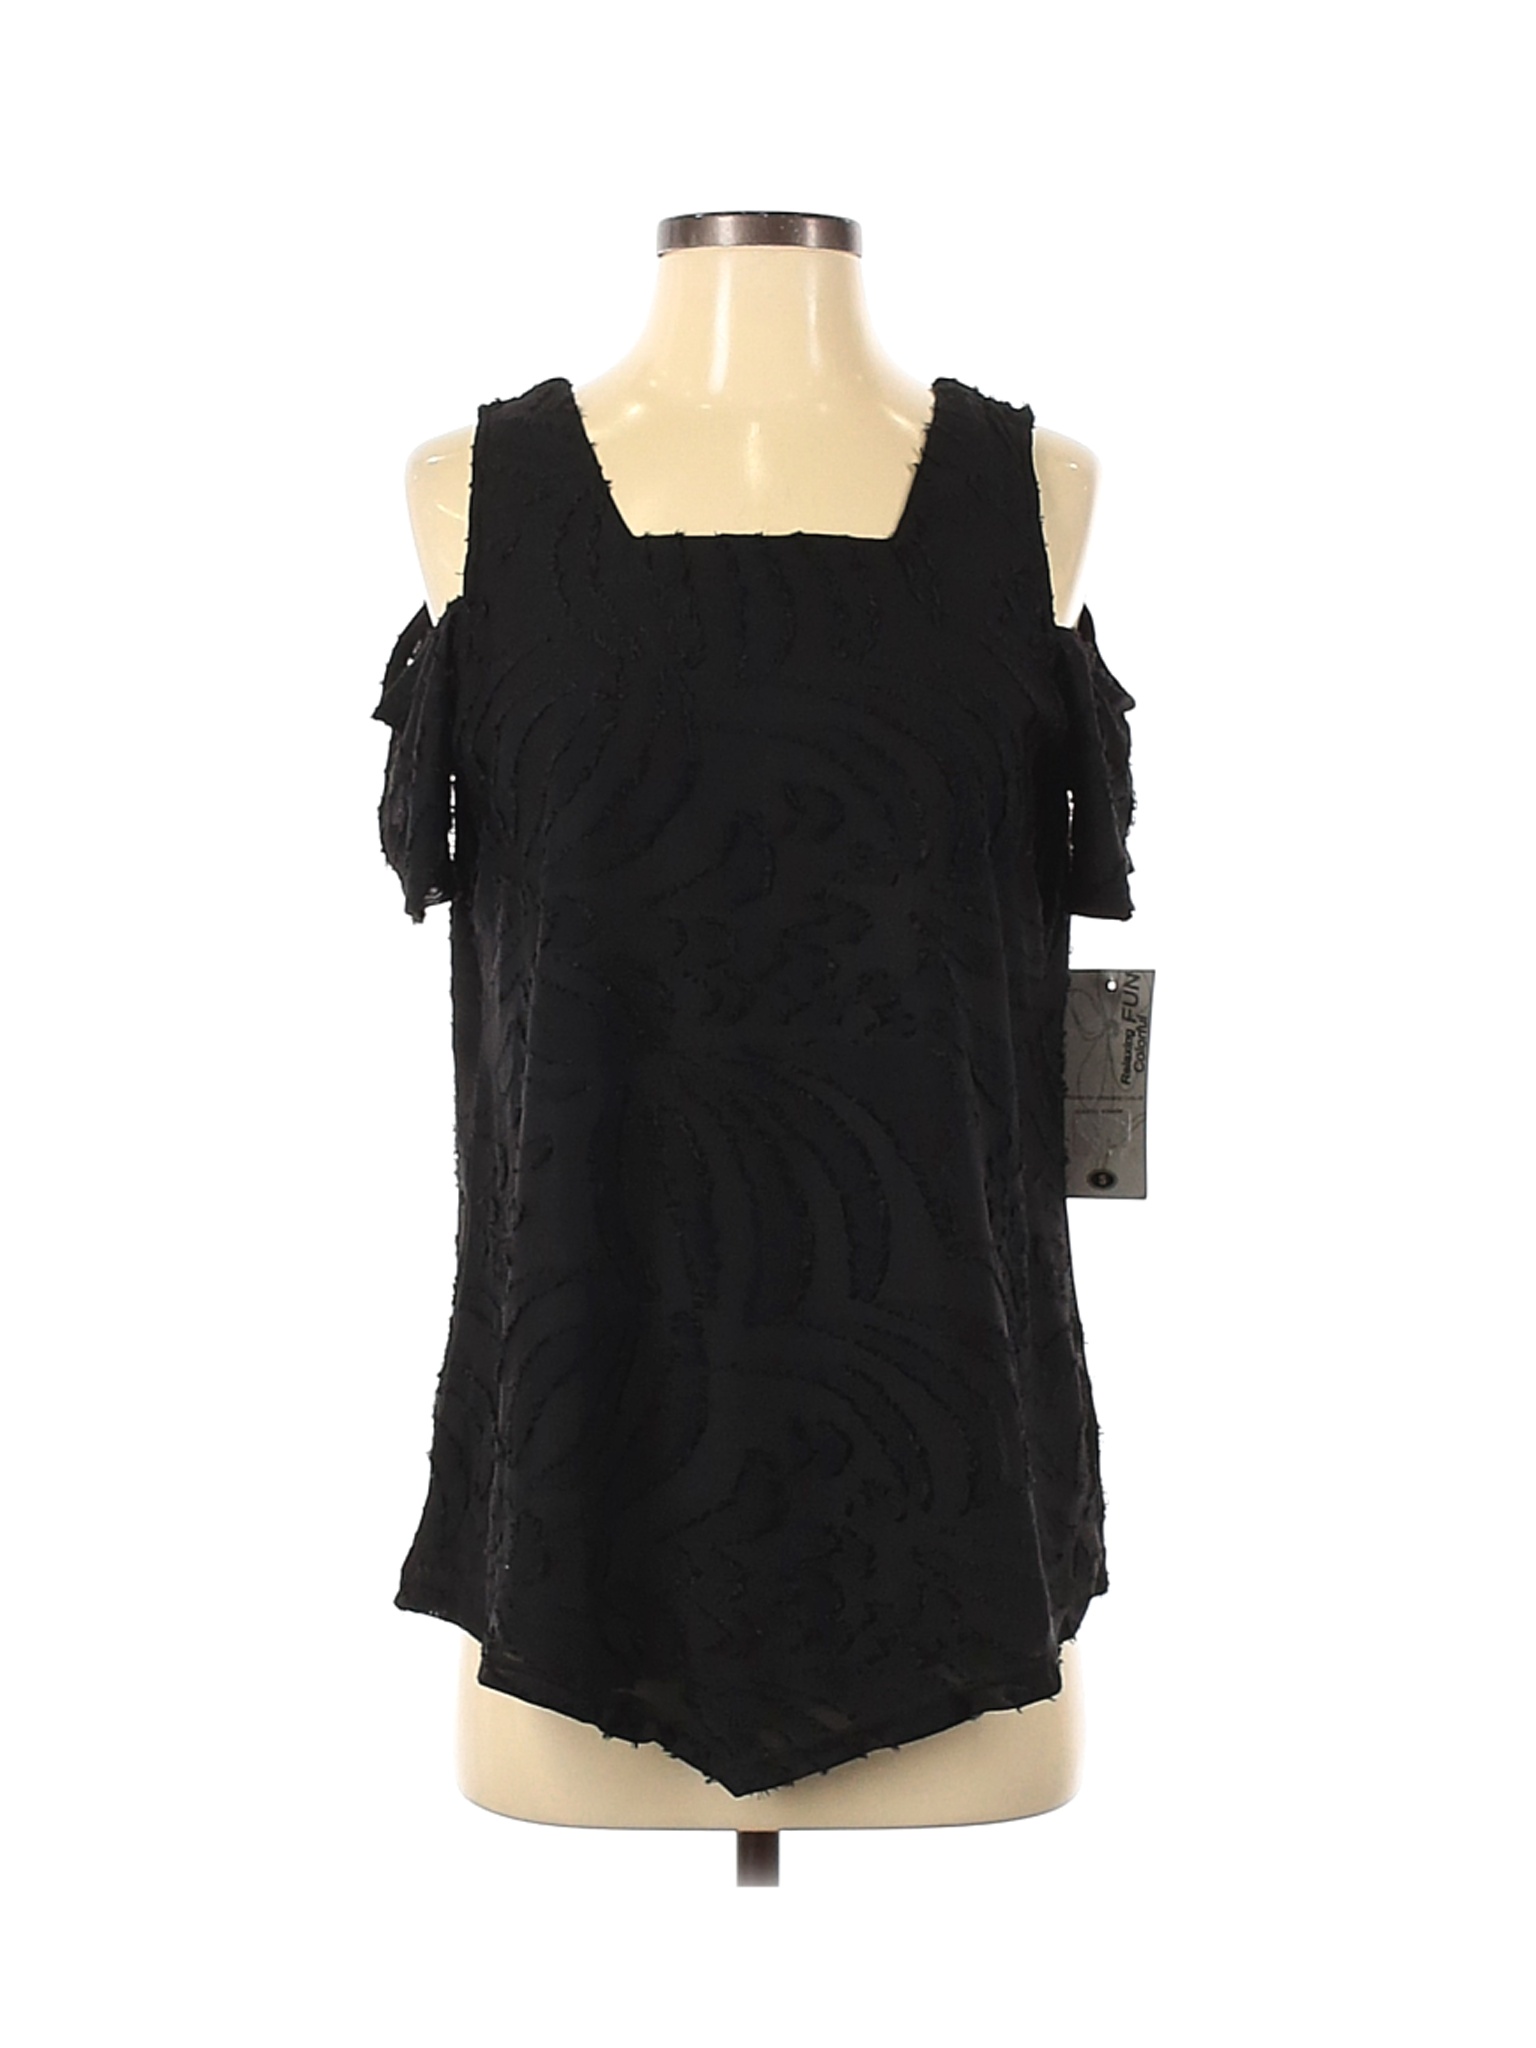 NWT Lulu-B Women Black Short Sleeve Blouse S | eBay